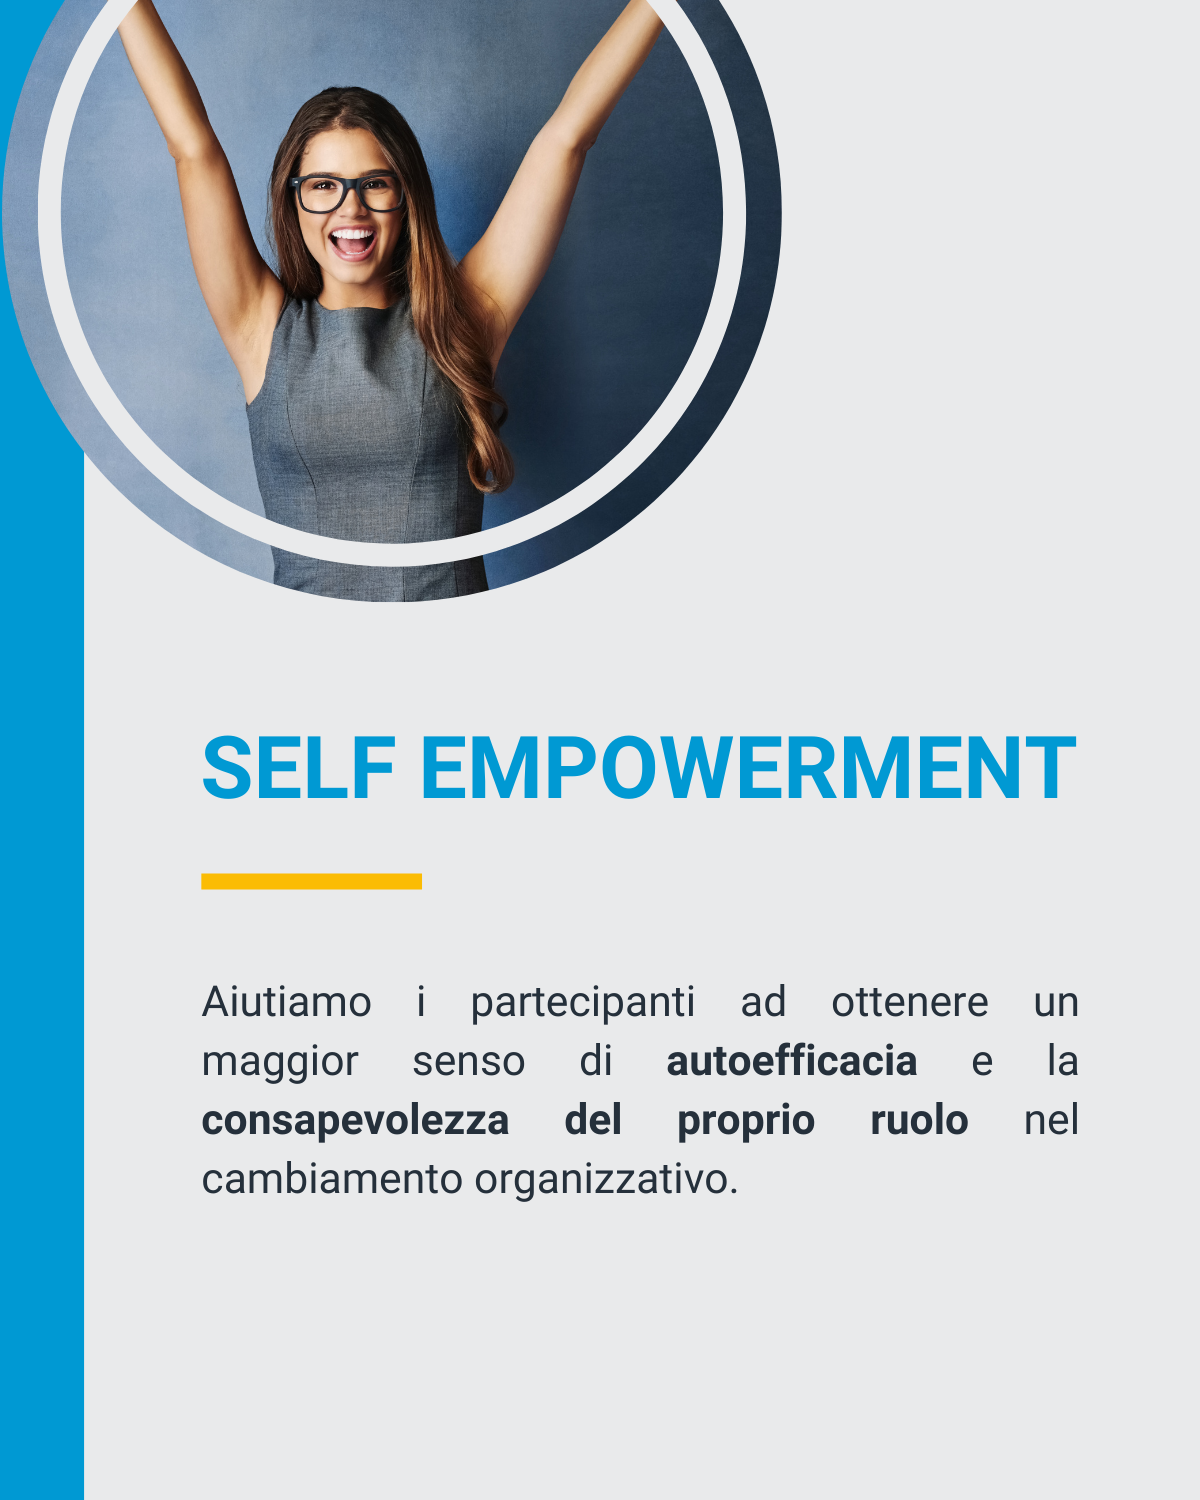 Self empowerment